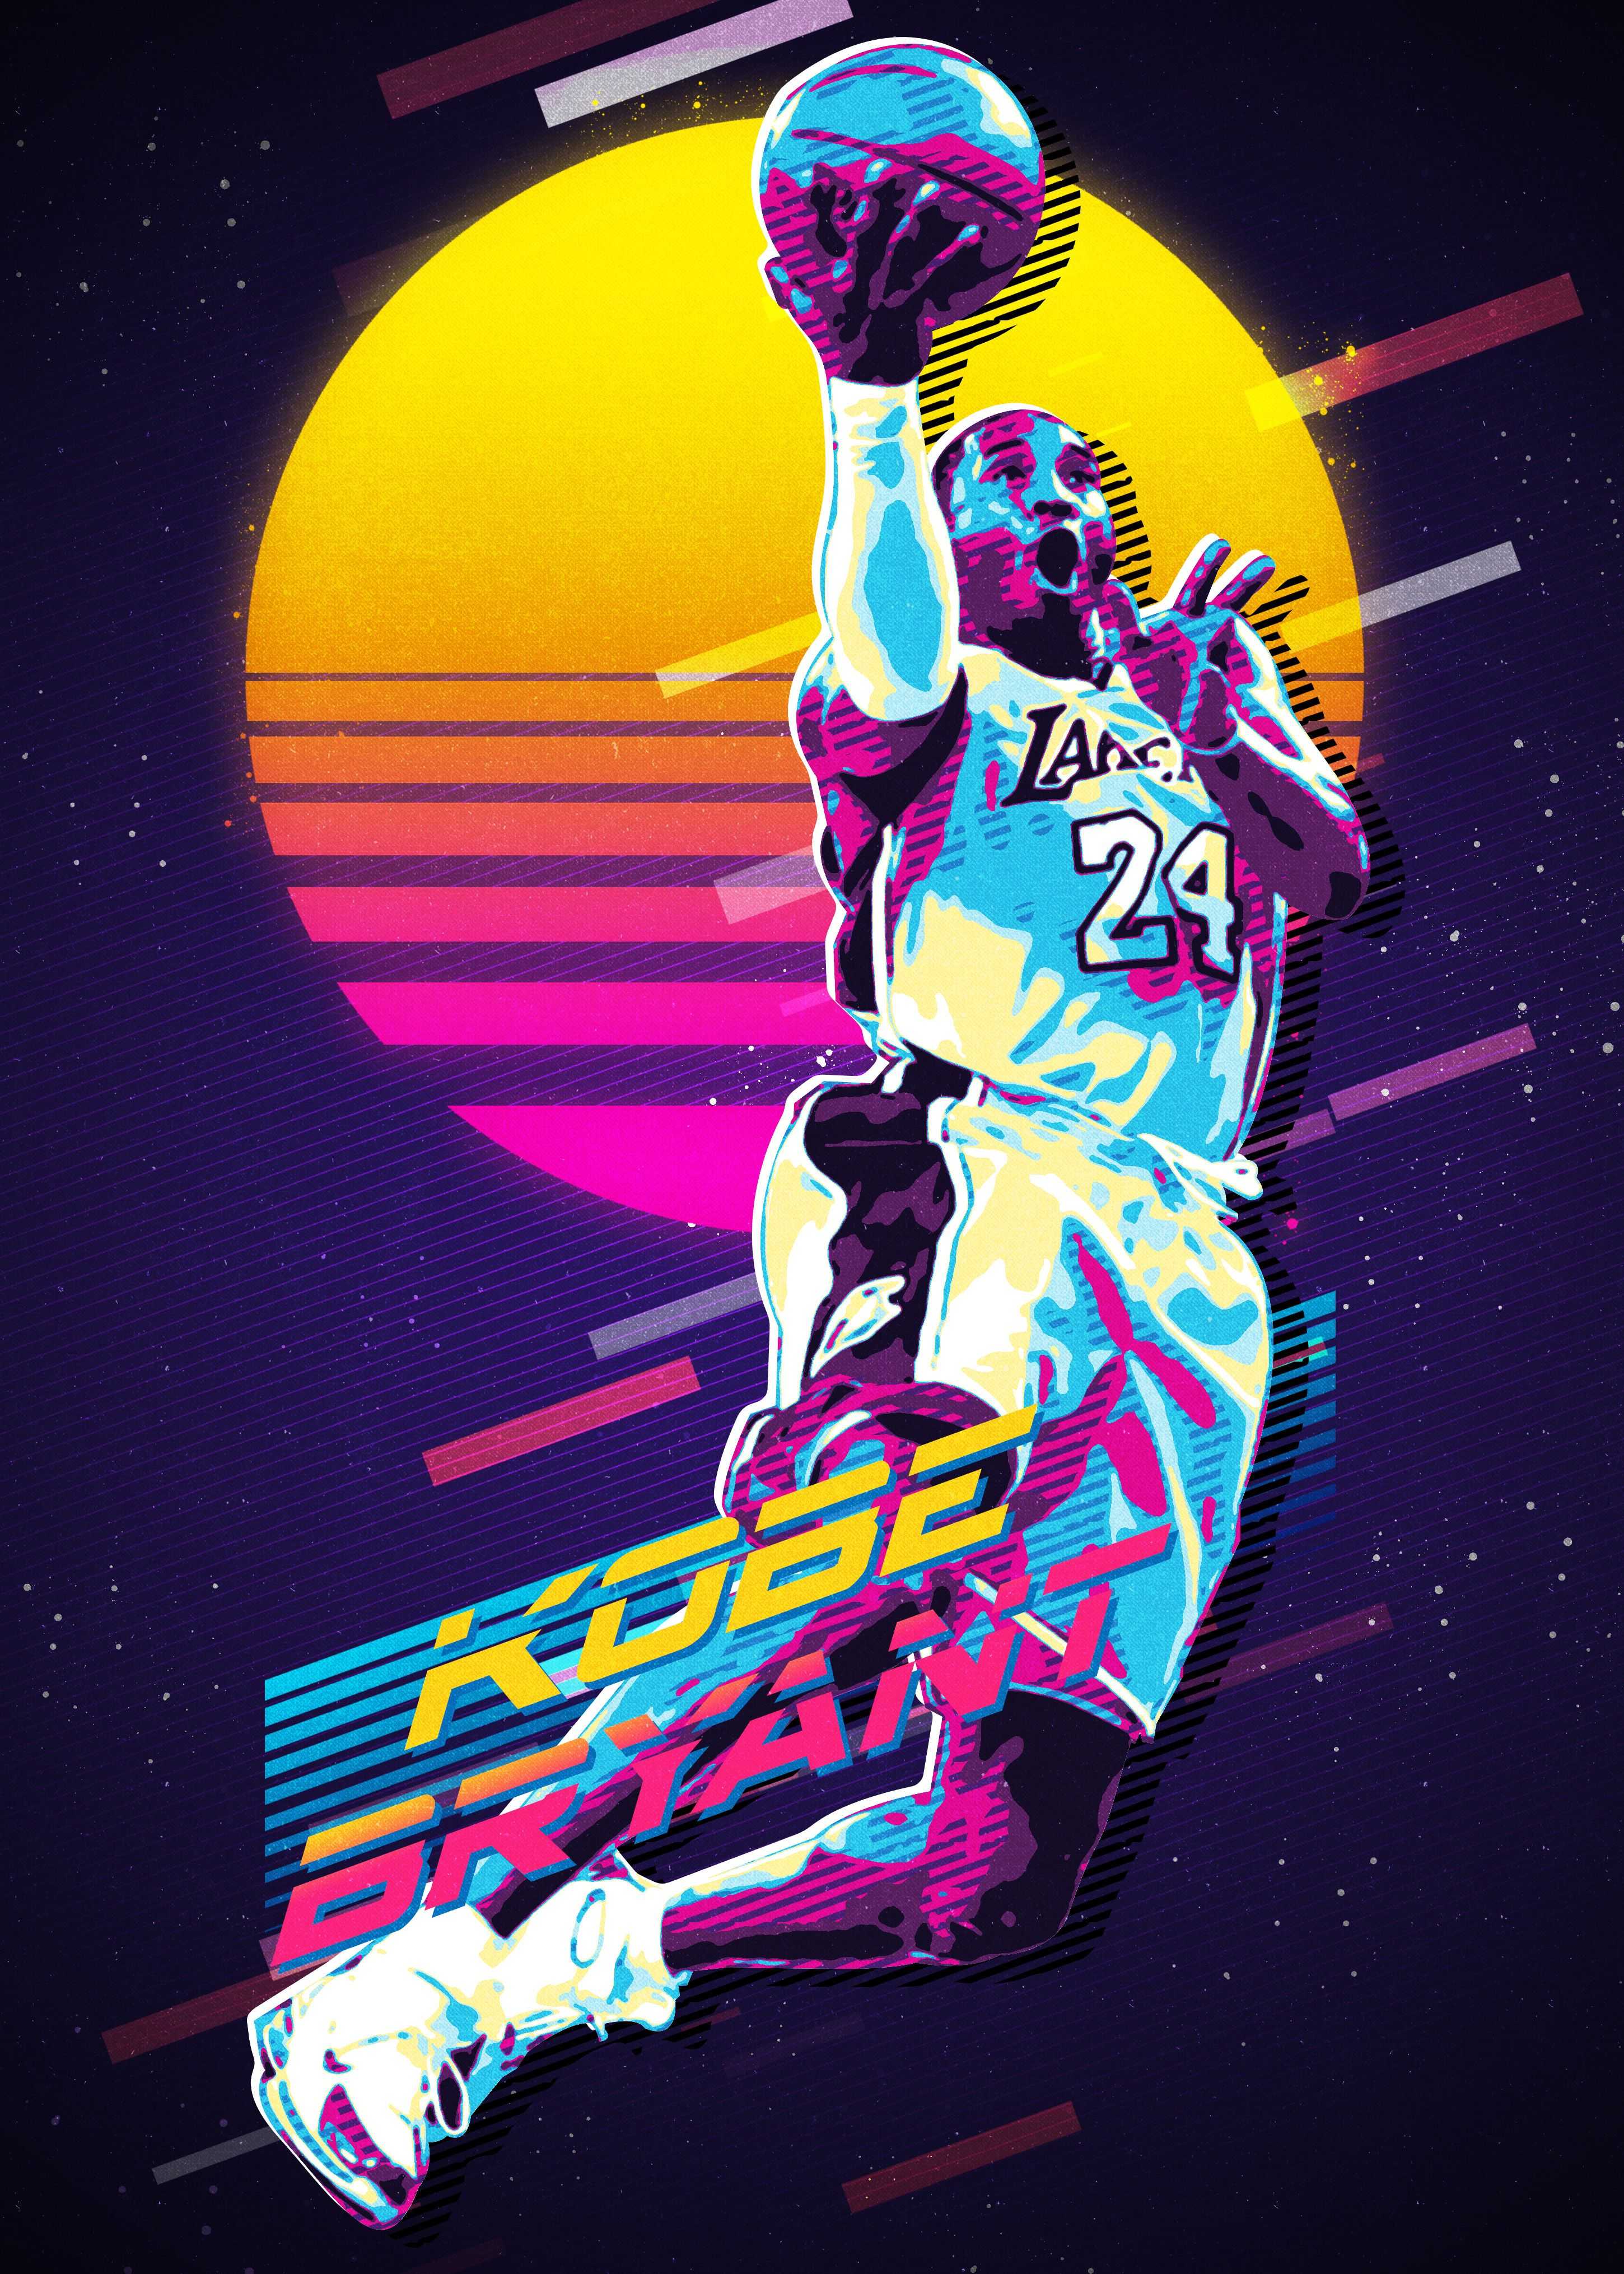 Kobe Bryant Wallpaper - NawPic